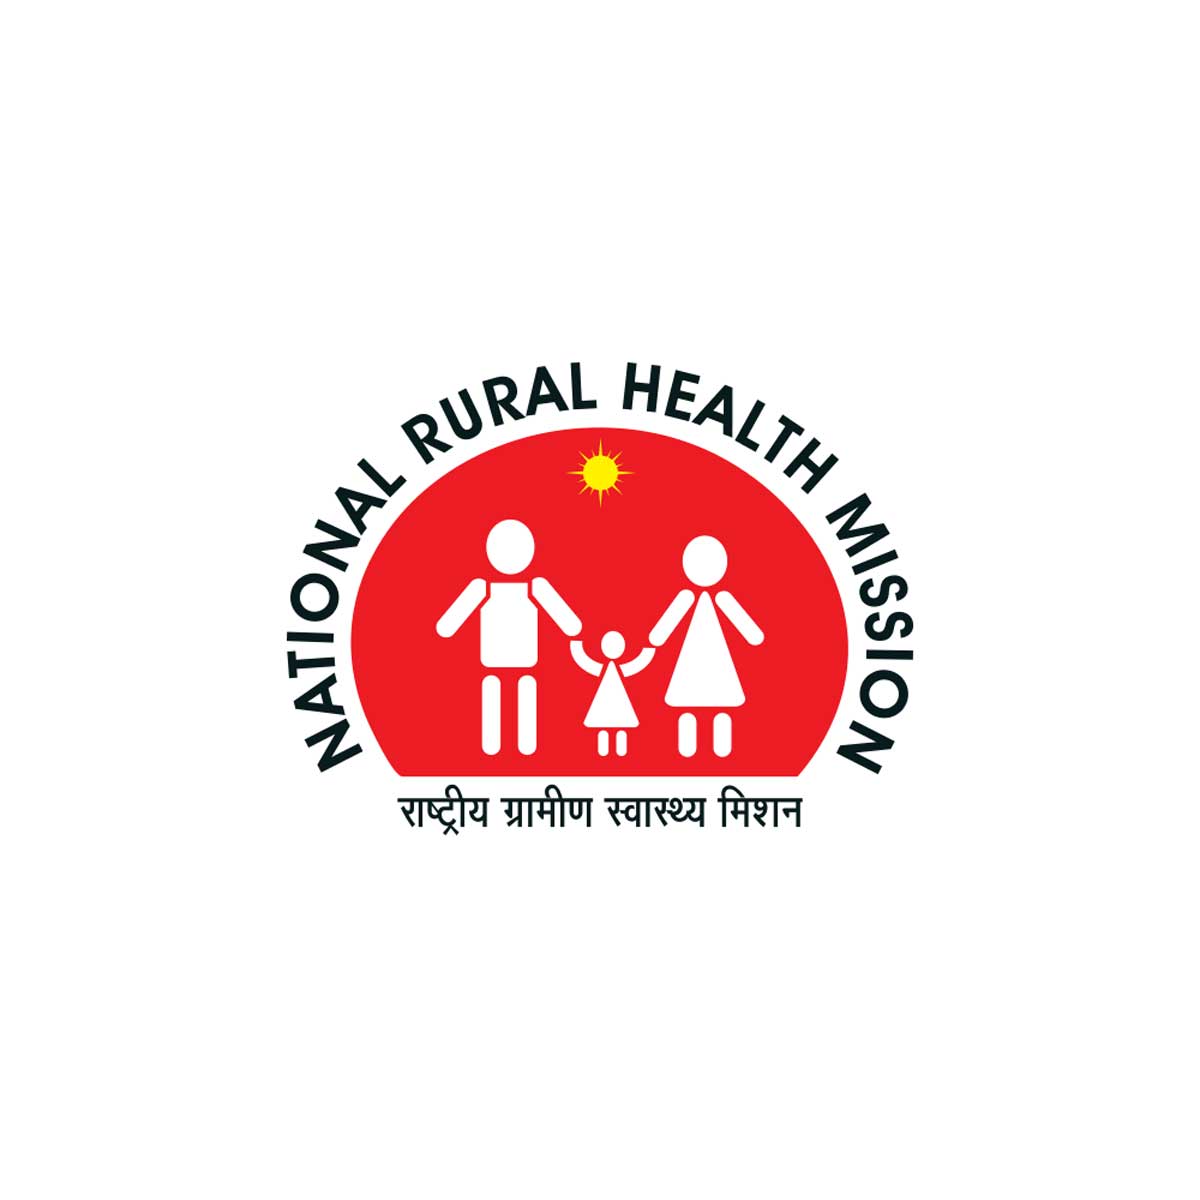 Nhm Mp Lab Technician Recruitment - National Health Mission Madhya Pradesh Job Vacancies